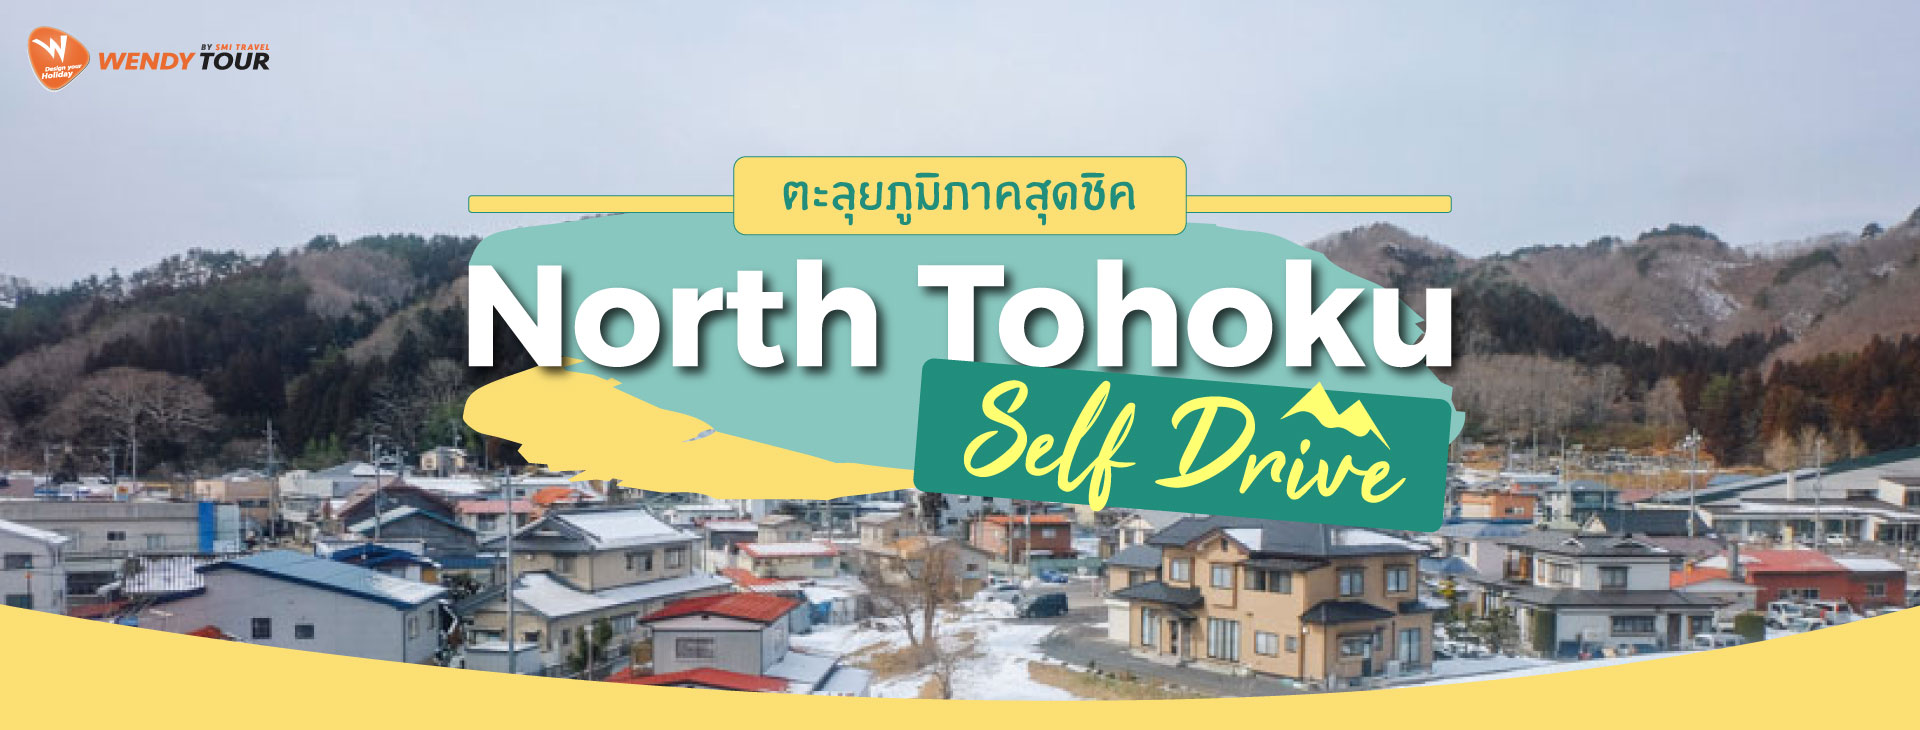 North Tohoku Self Drive ขับรถเที่ยงเอง 5 วัน 4 คืน 